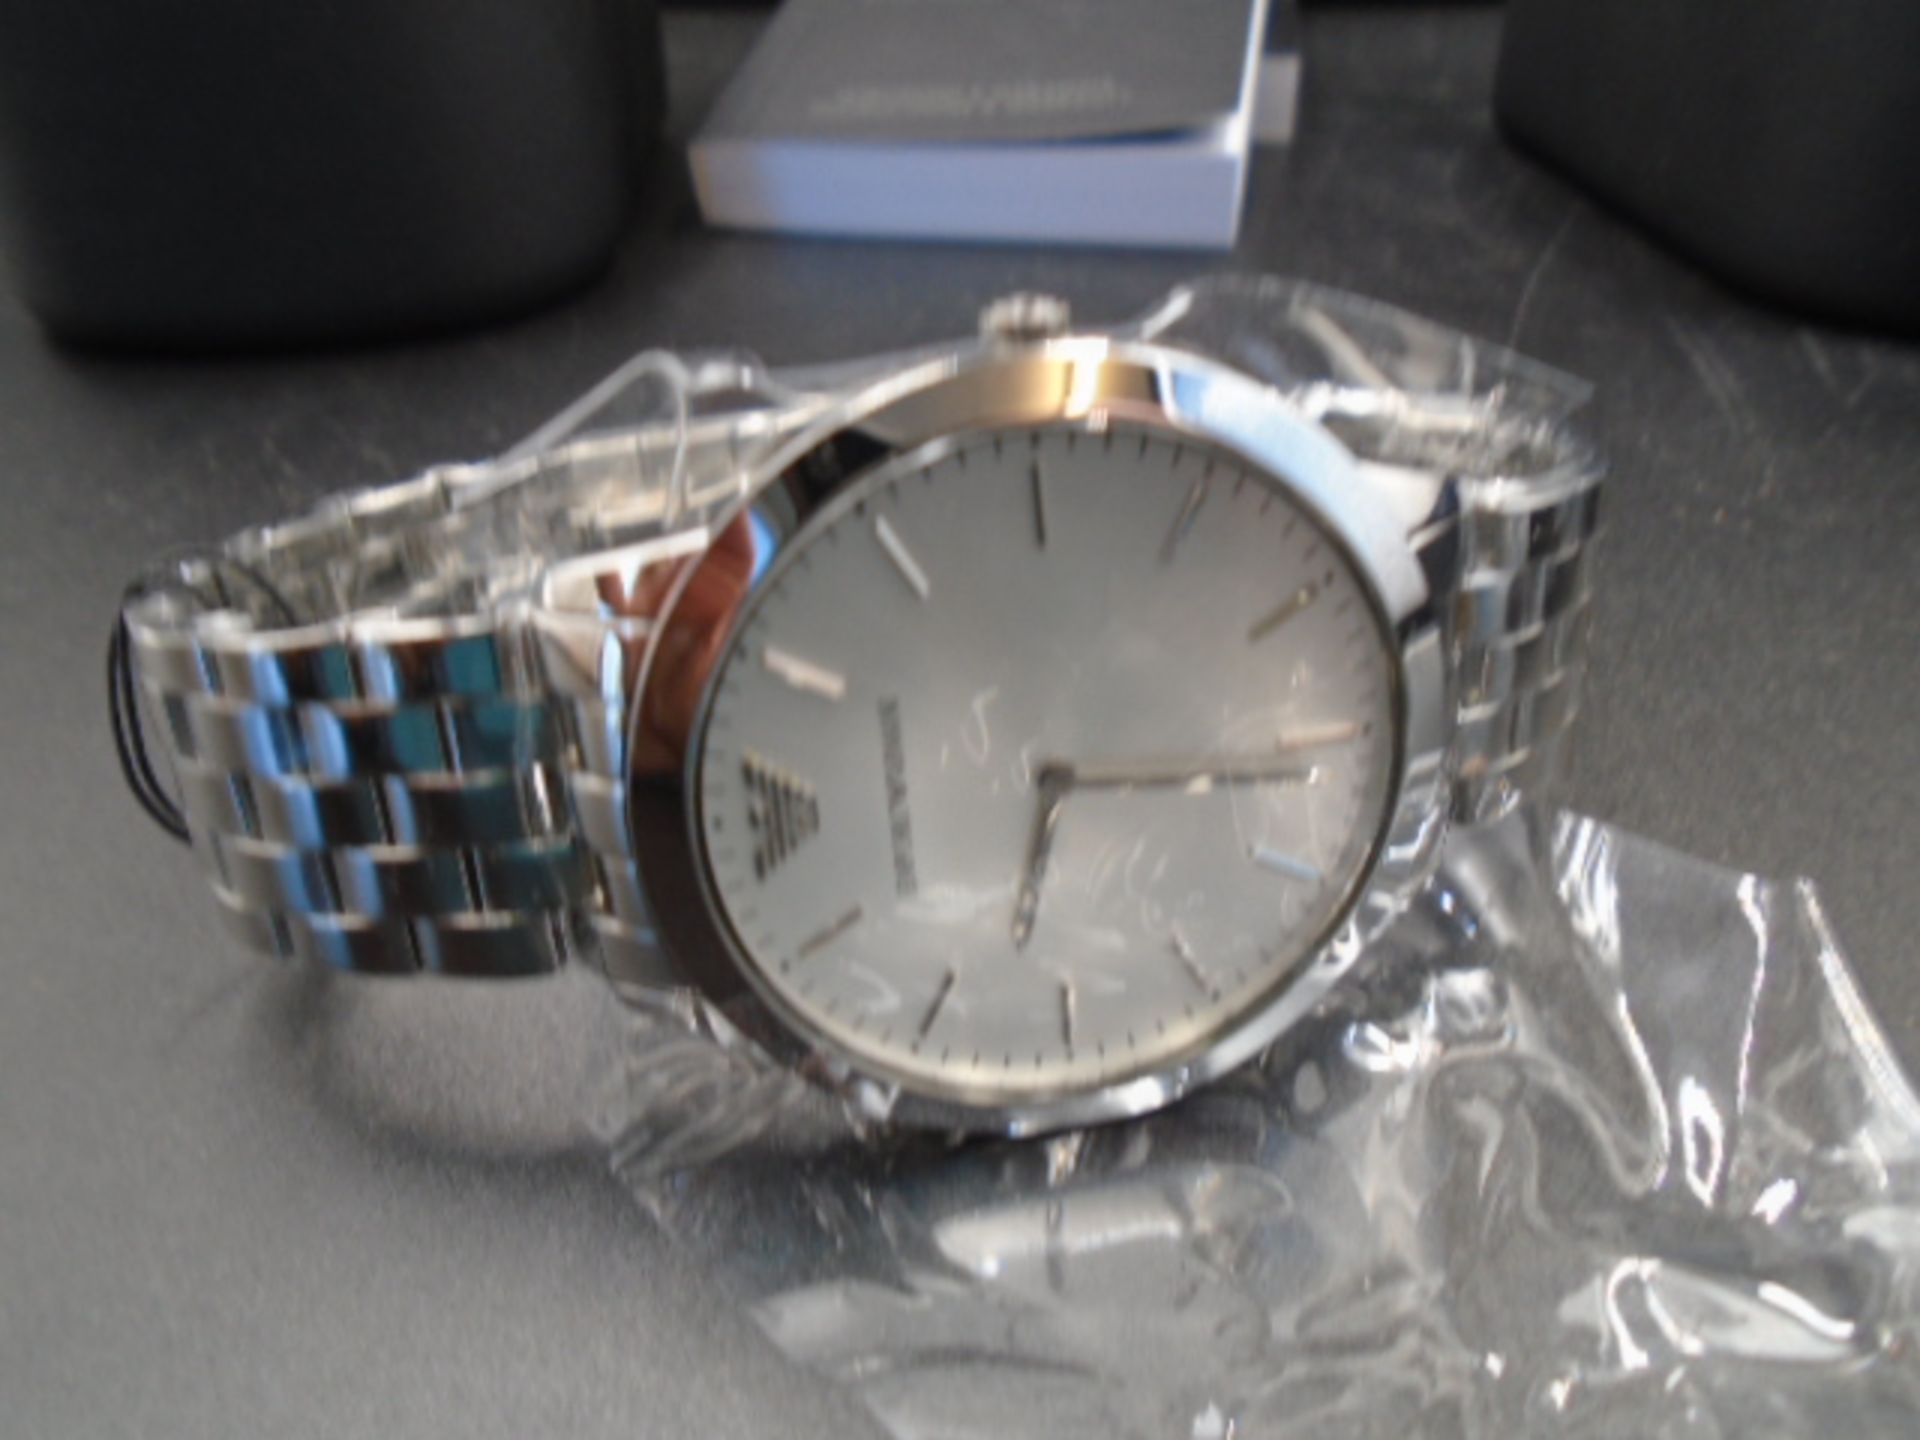 2 Emporio Armani watches - mens dino slim steel bracelet model AR 1745 and ladies quartz watch - Image 10 of 11